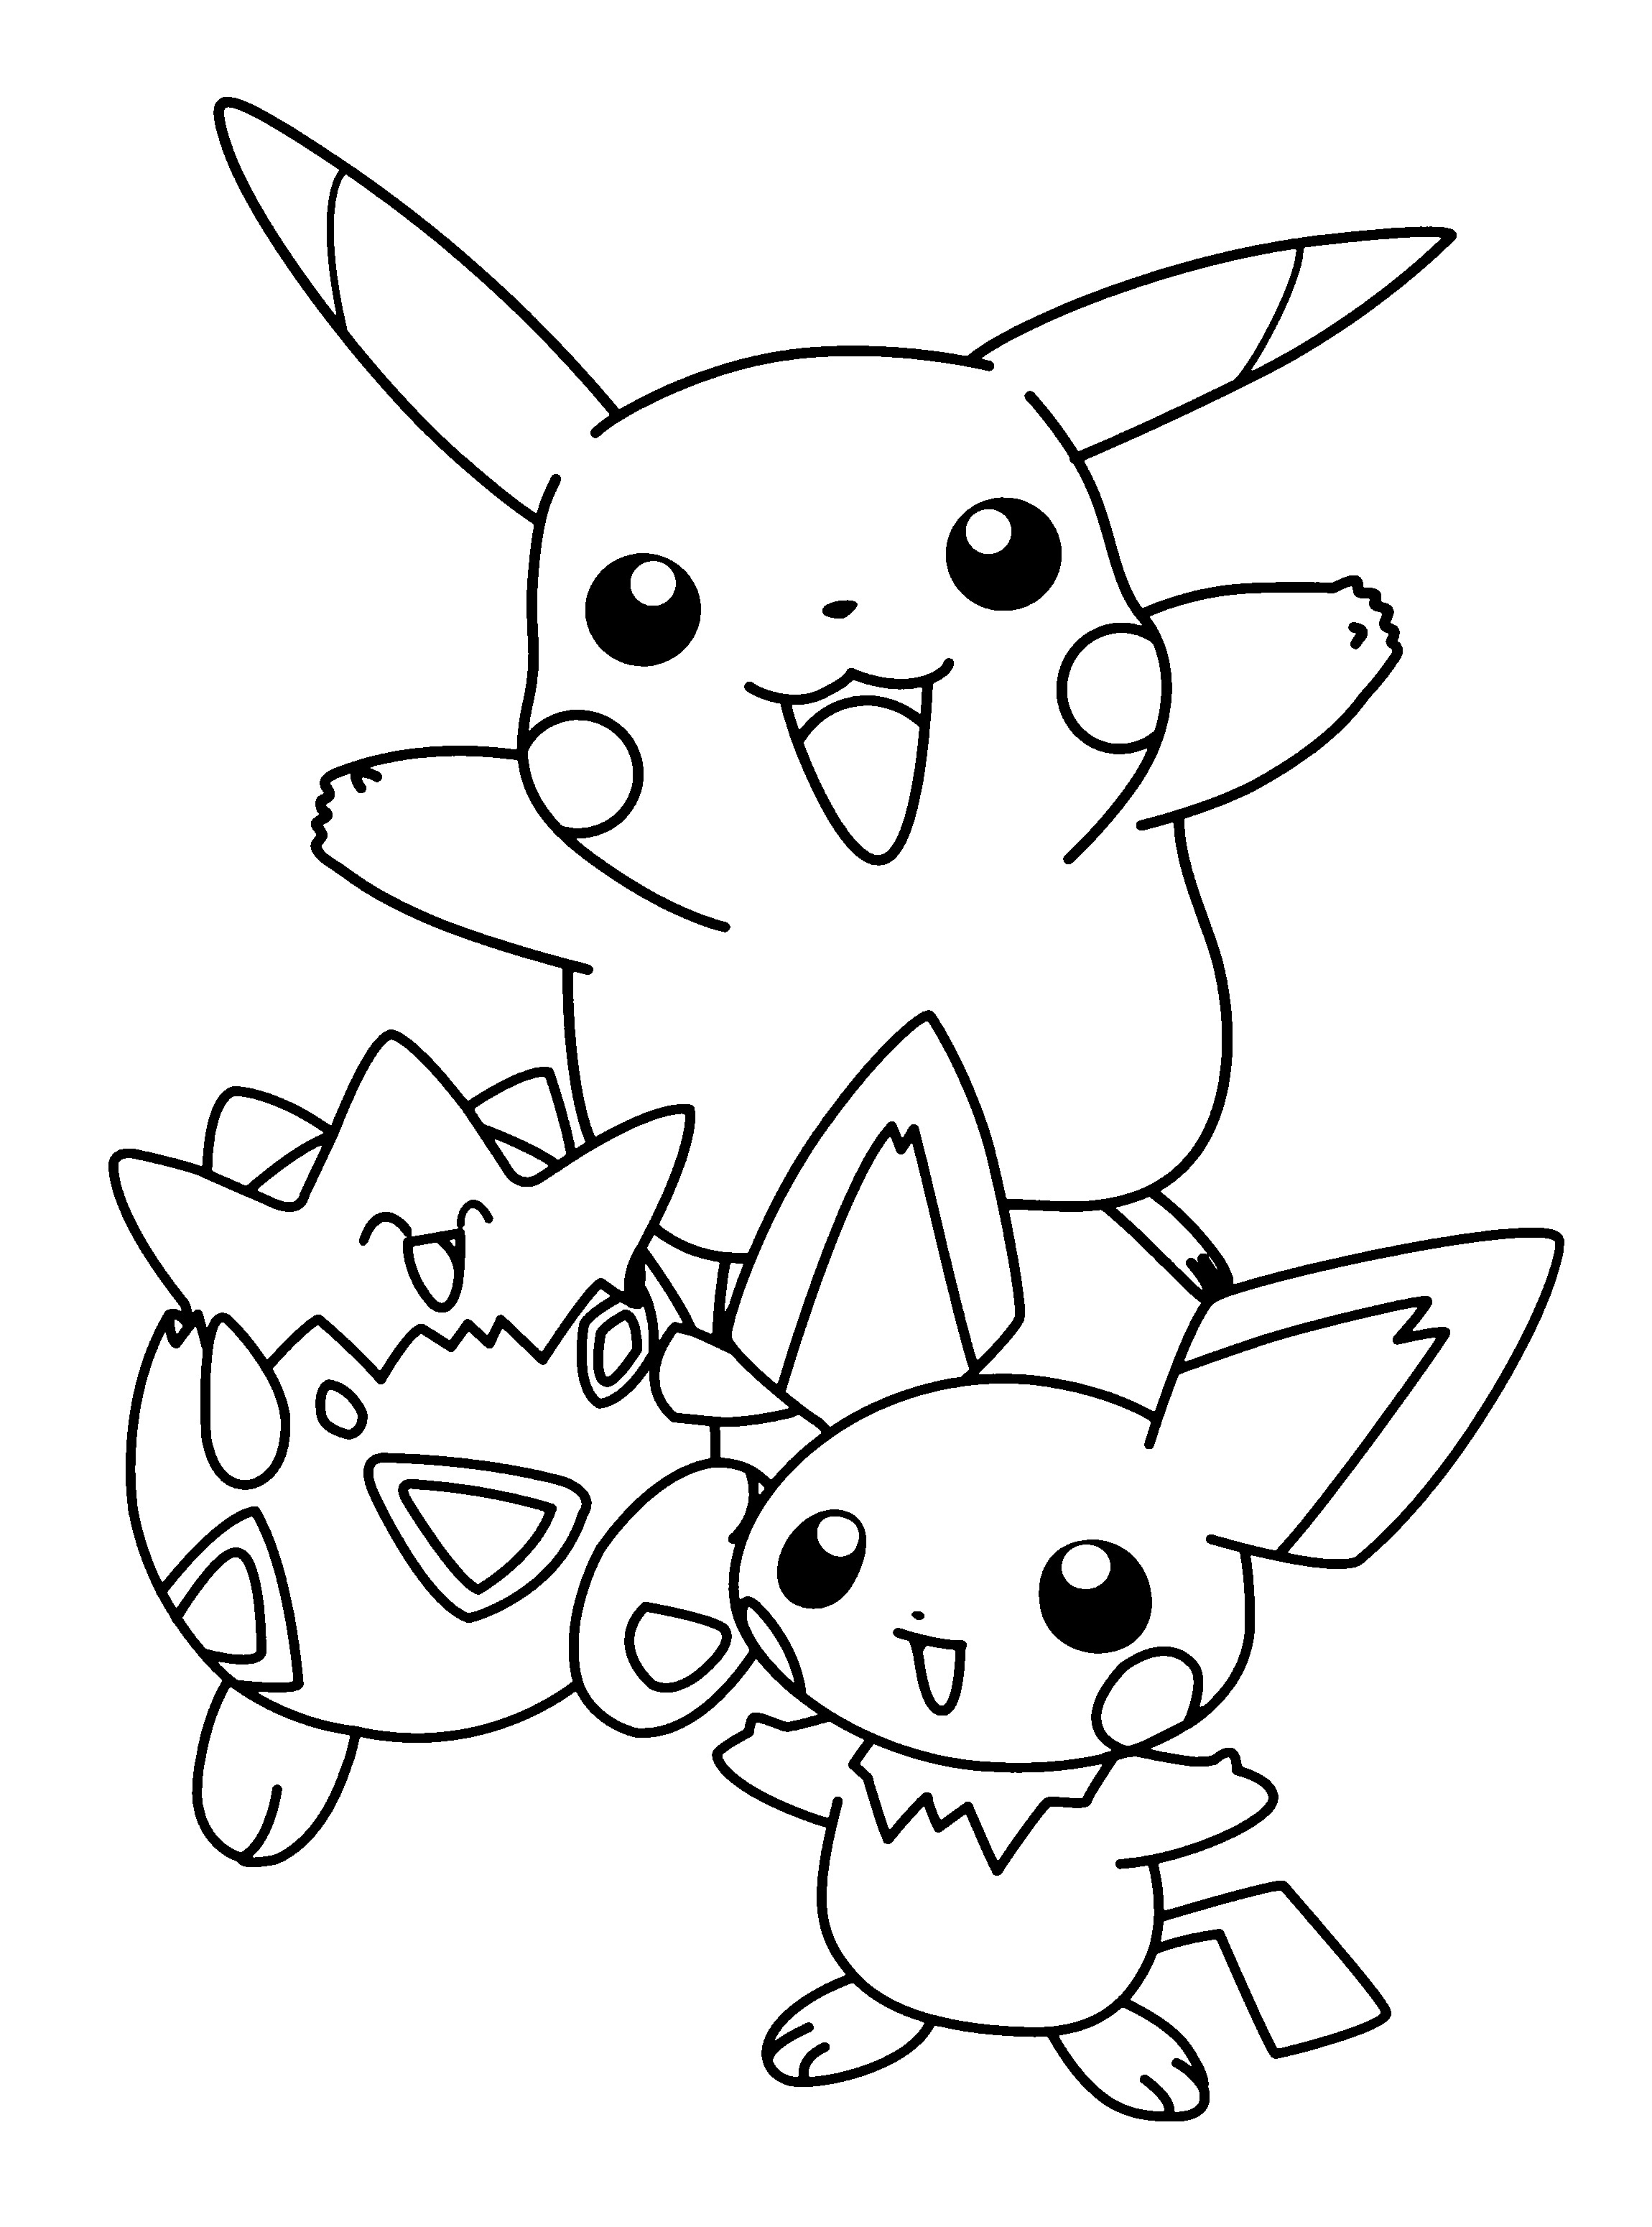 Cute Pokemon Coloring Pages - BubaKids.com